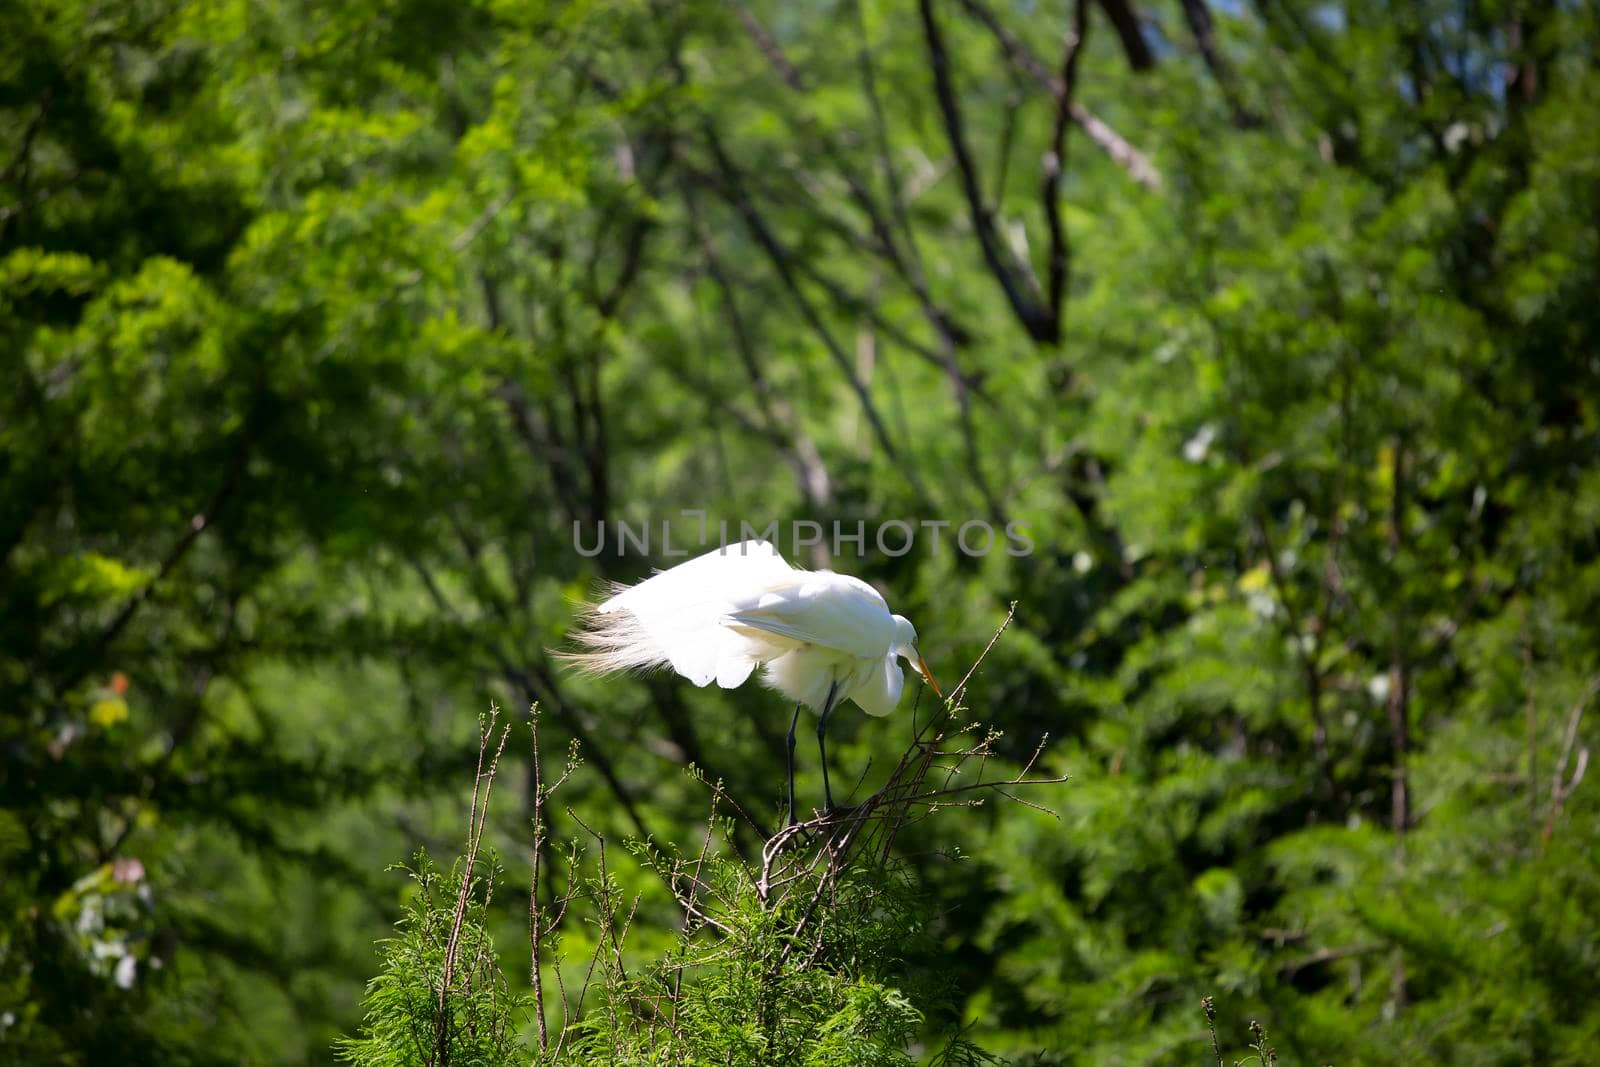 Great Egret on a High Perch by tornado98